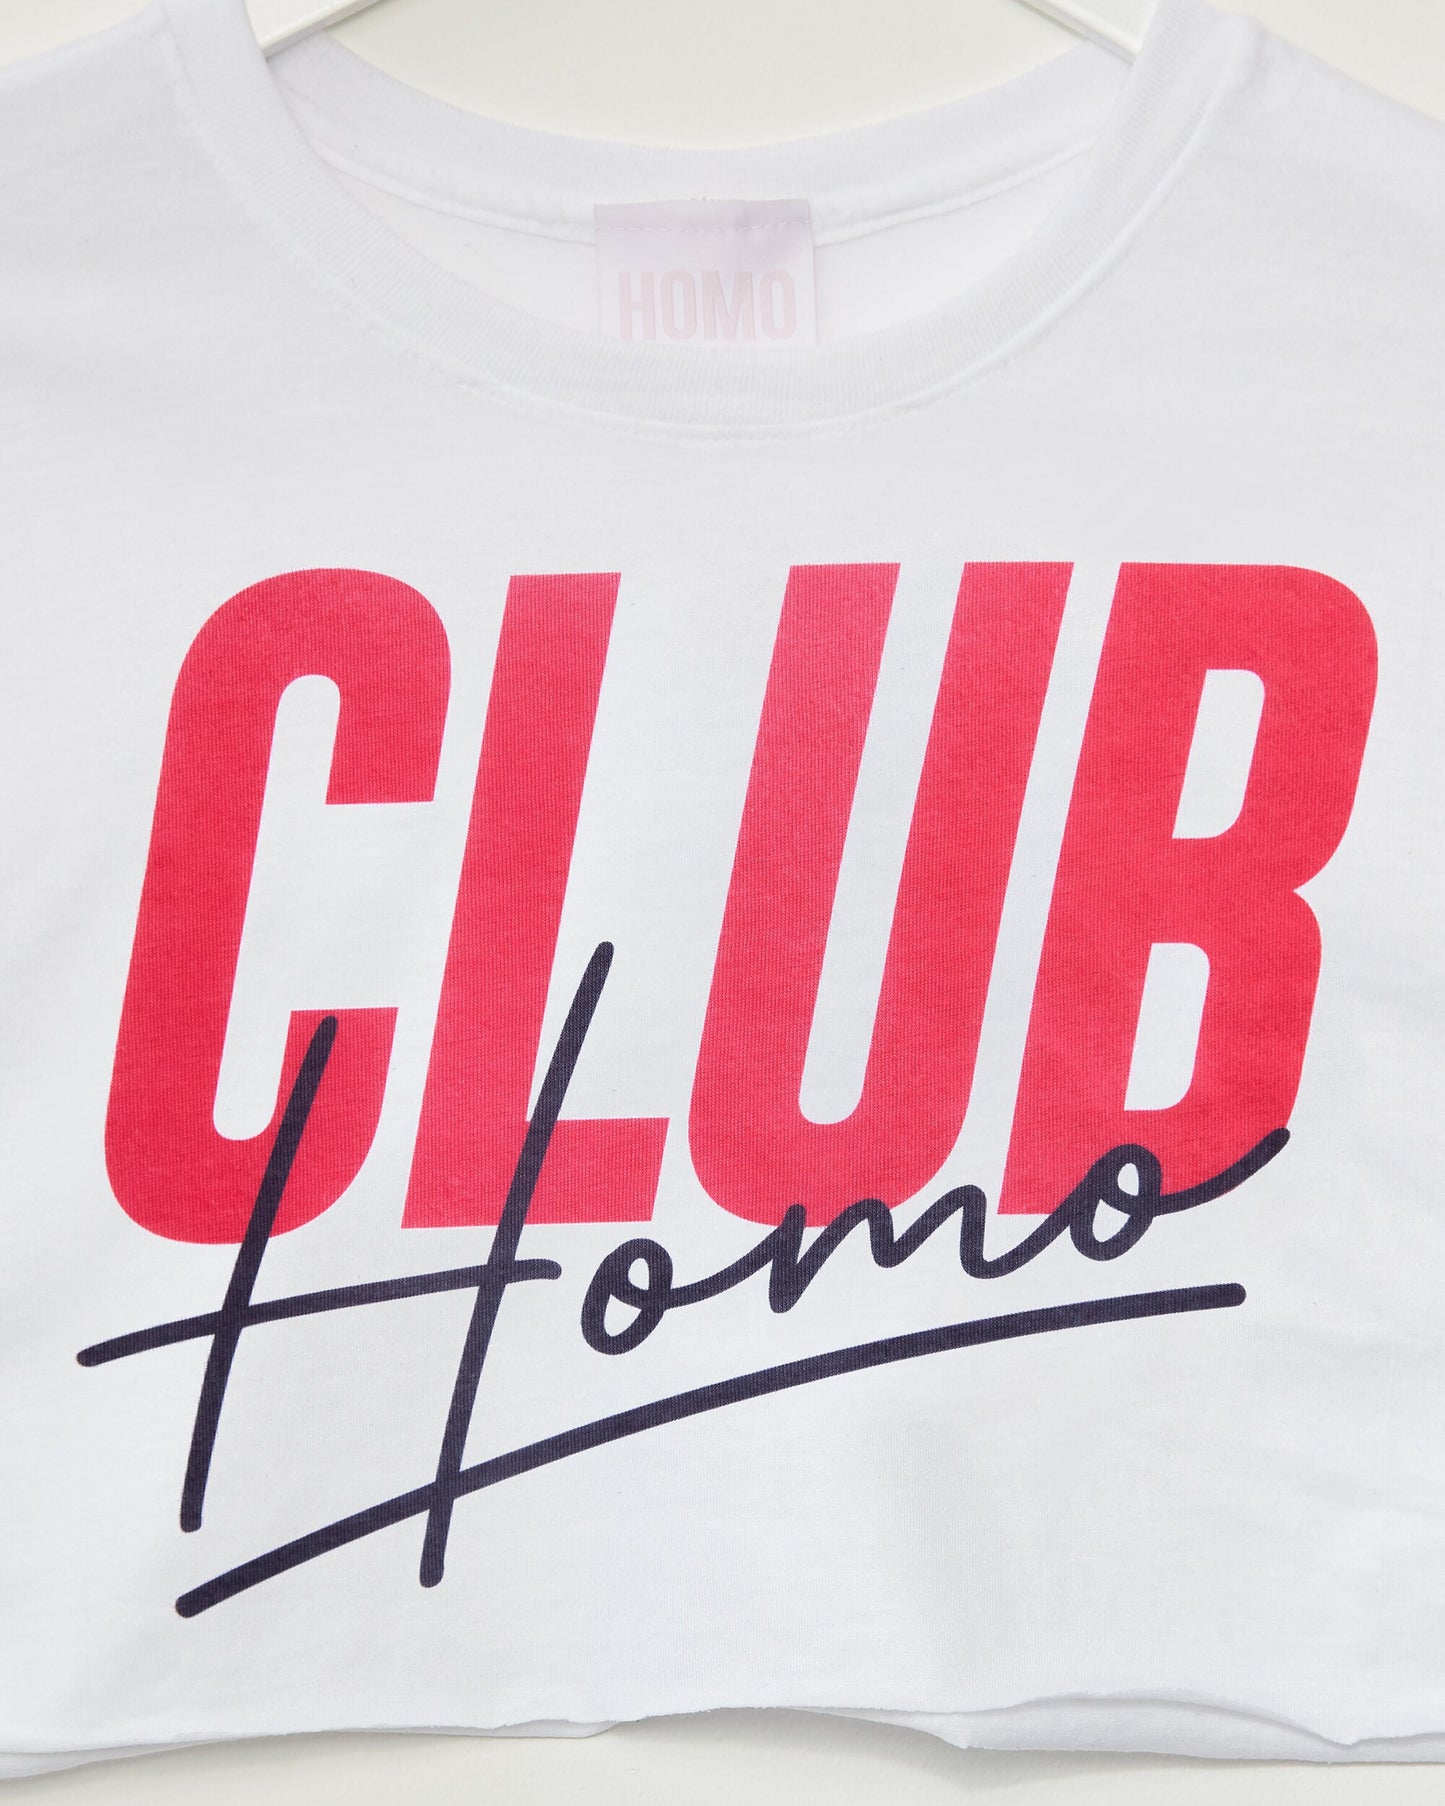 Club HOMO - Sleeveless crop-top.